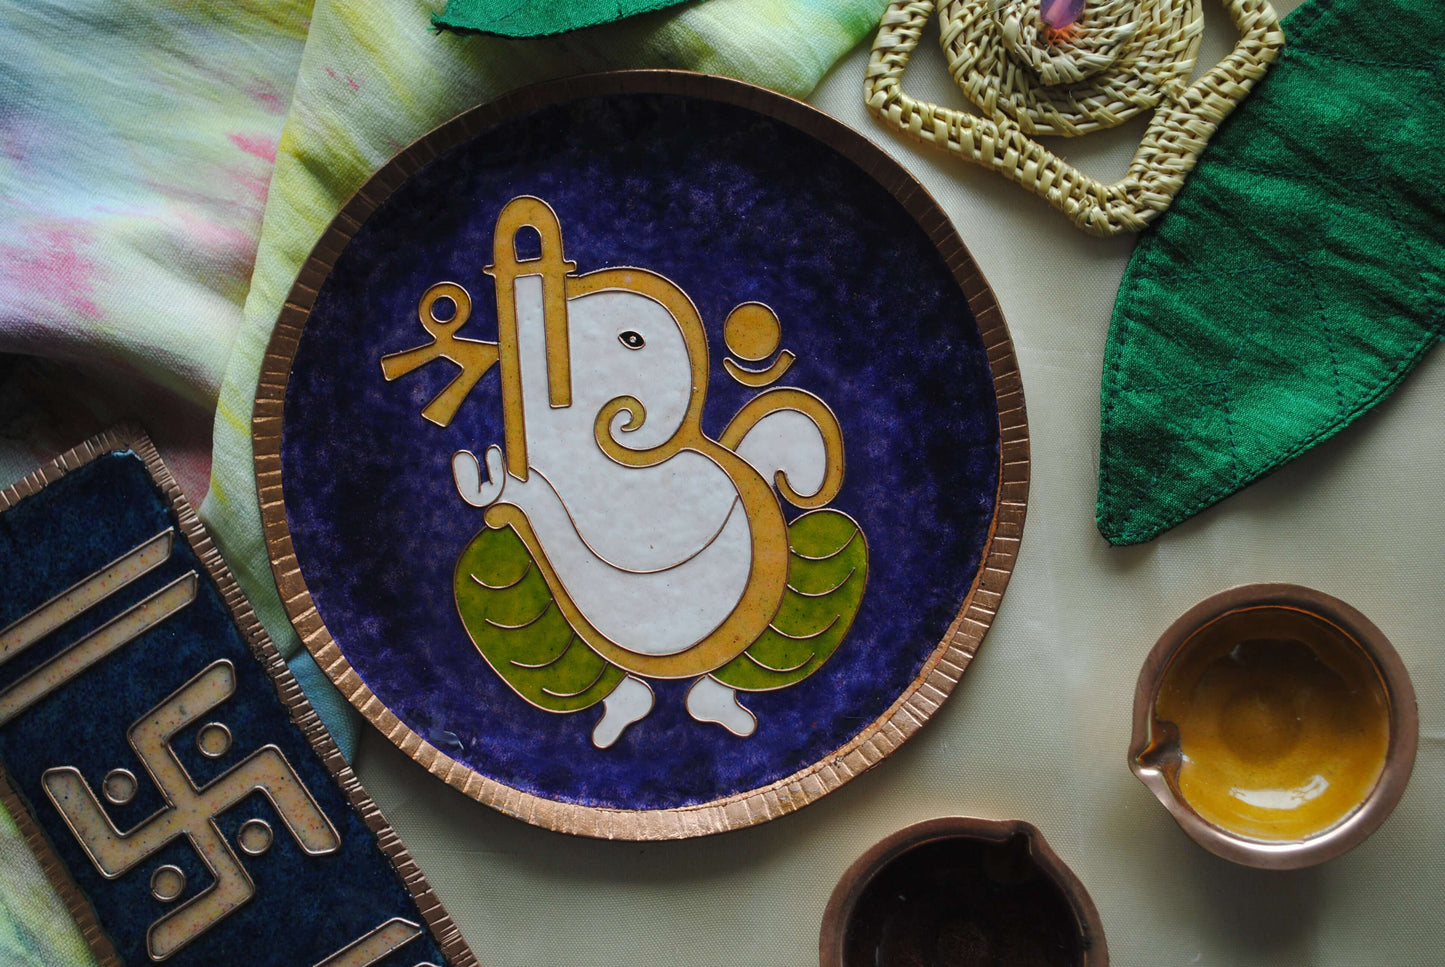 Home decor wall plates of Ganesh as Omkara, Ekdanaka, Vinayaka, handpainted and enameled on beaten copper